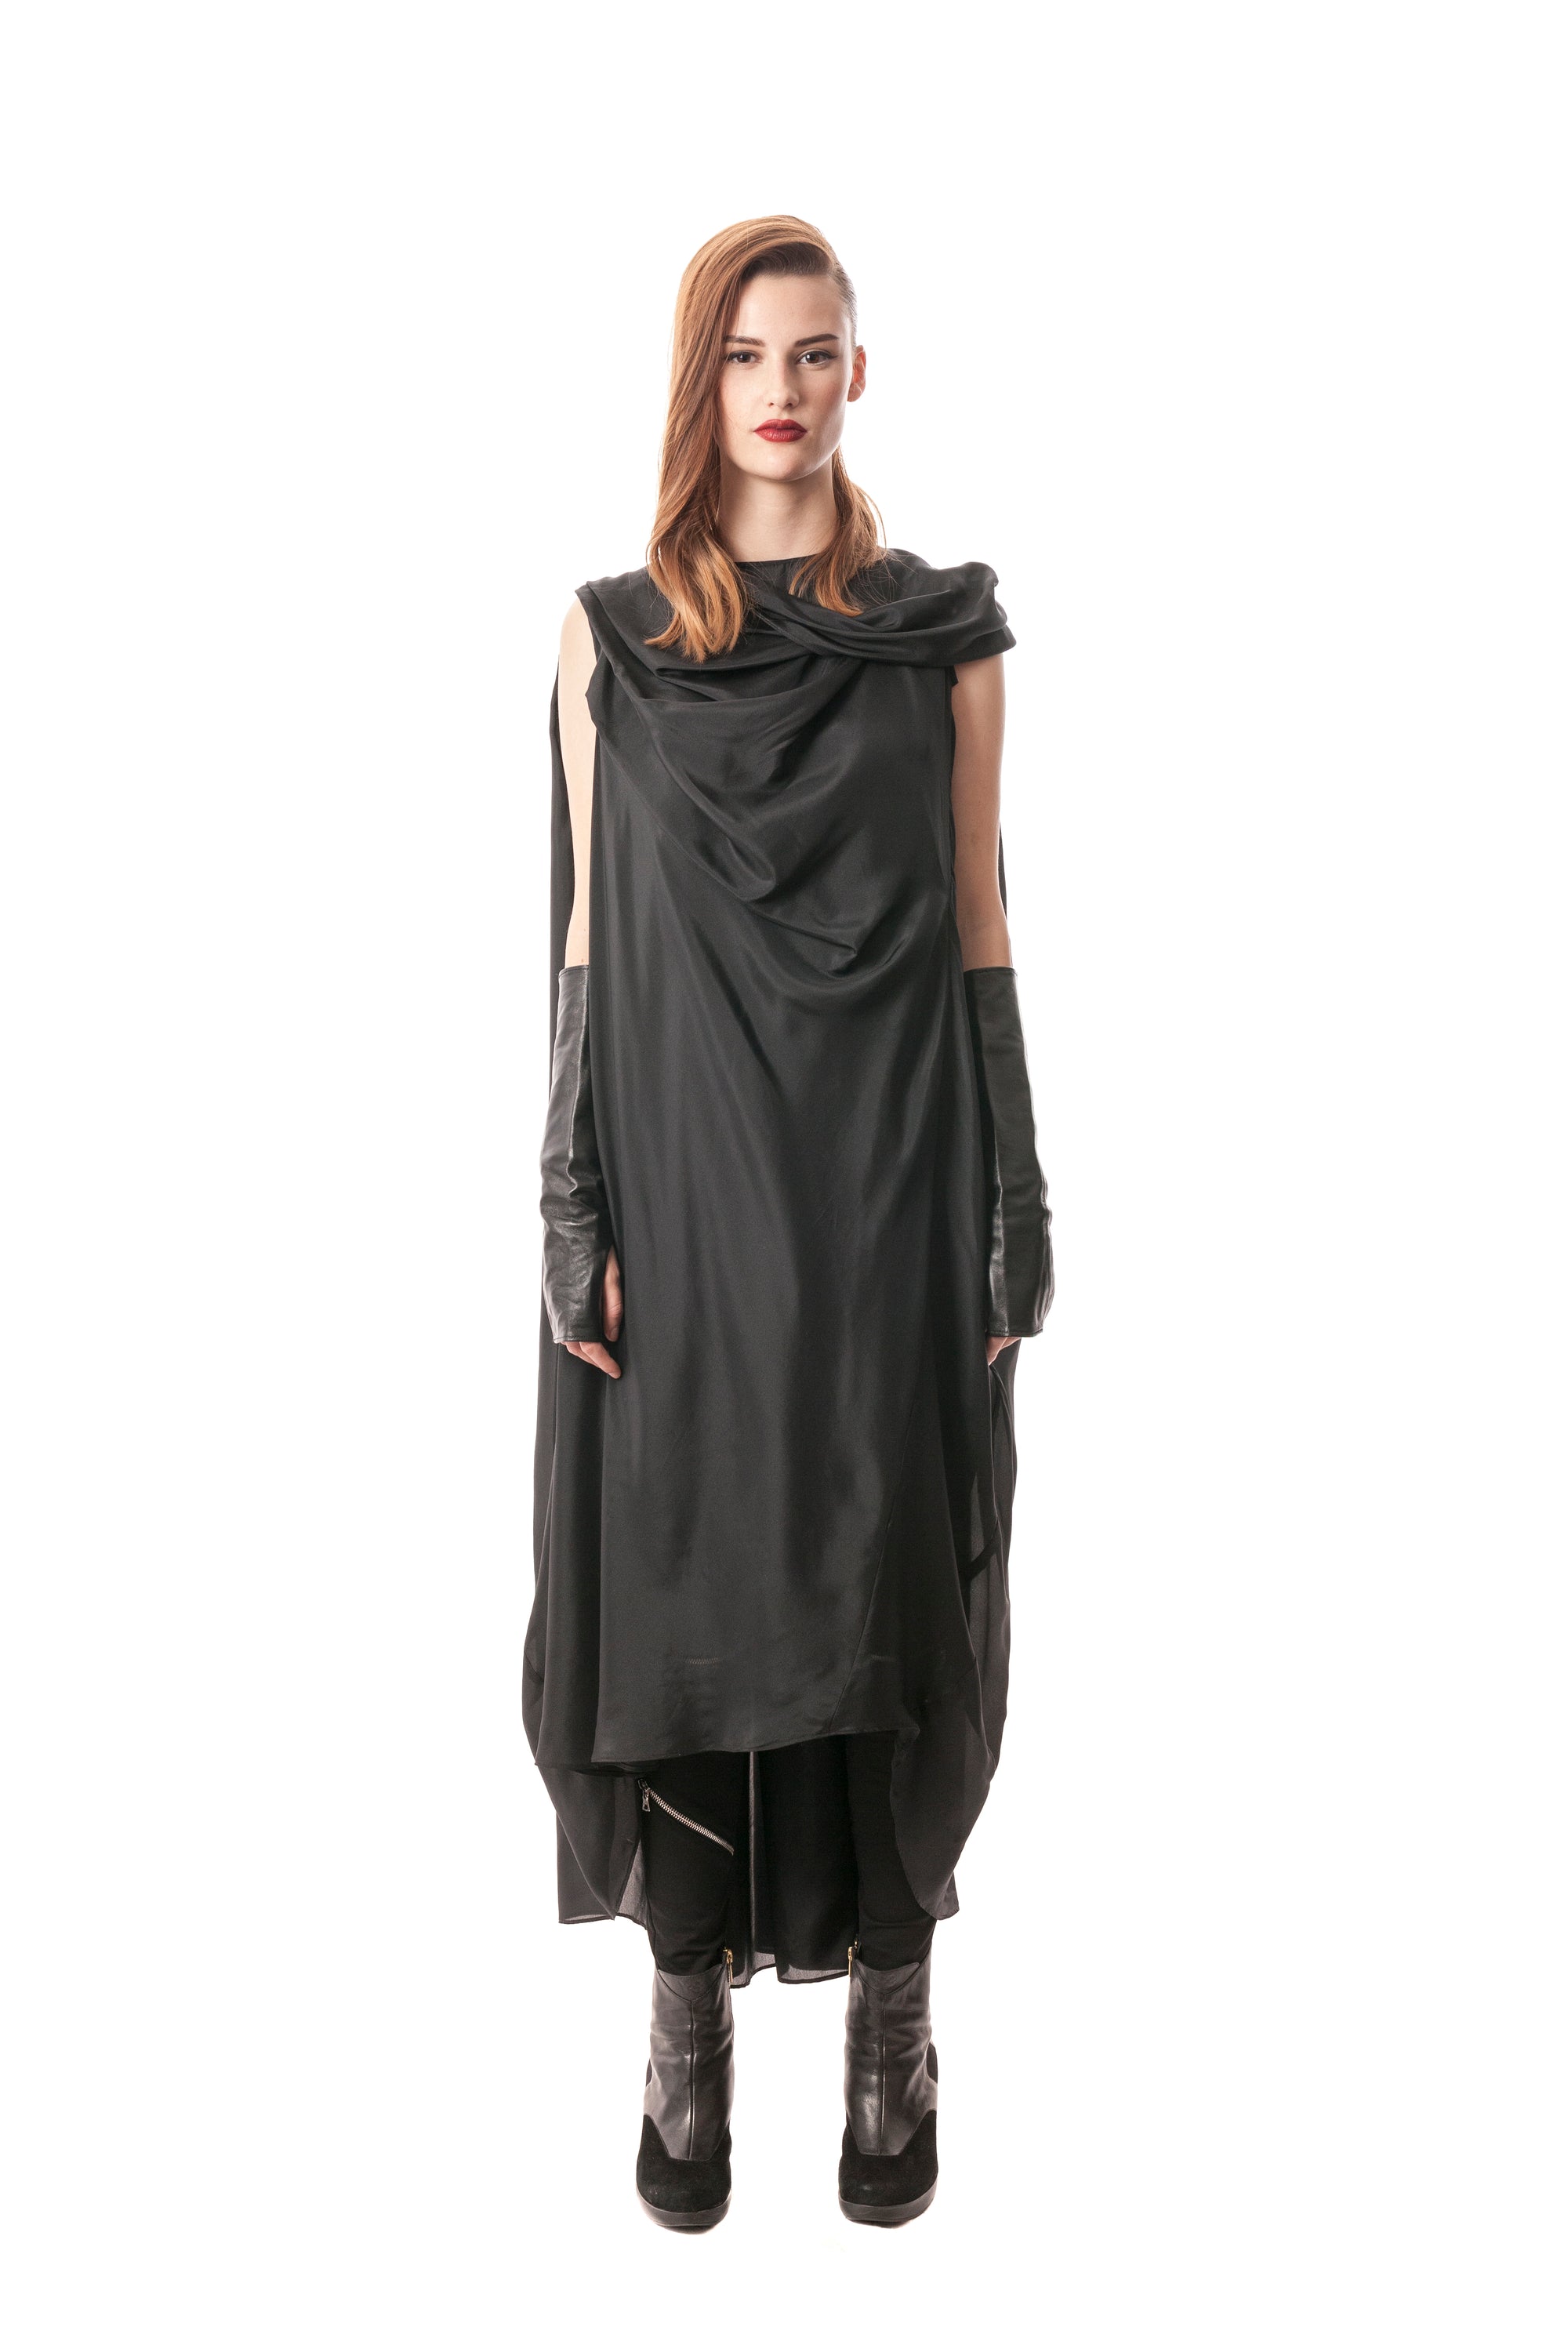 Black Silk Long Draped Gown Dress Romper